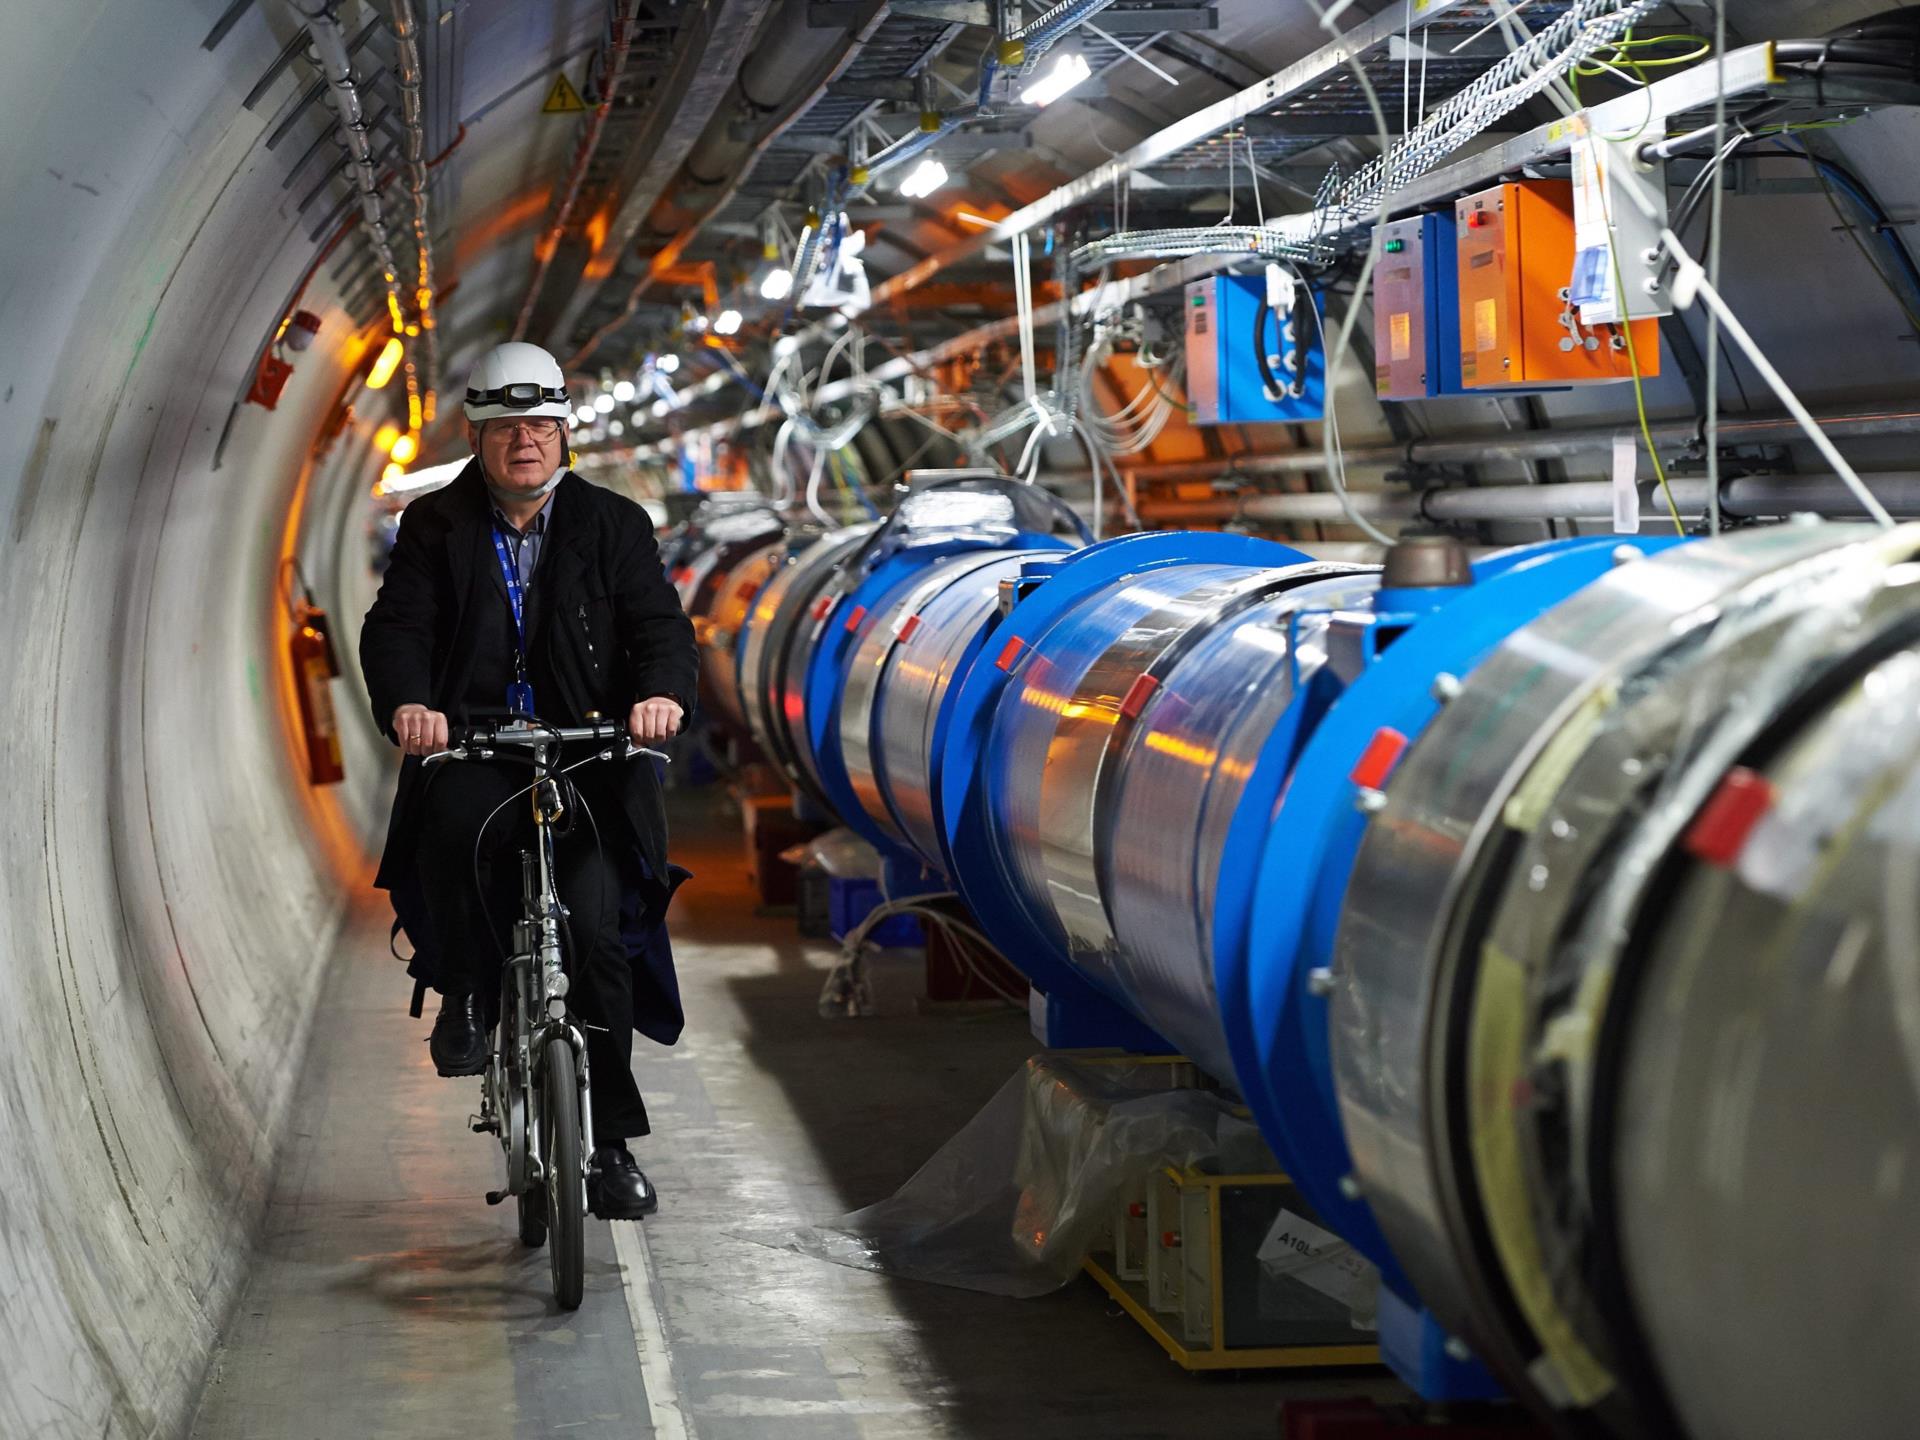 Самая большая частица. Адронный коллайдер ЦЕРН. Швейцария ЦЕРН коллайдер. Большой адронный коллайдер ЦЕРН. Большой адронный коллайдер в CERN.